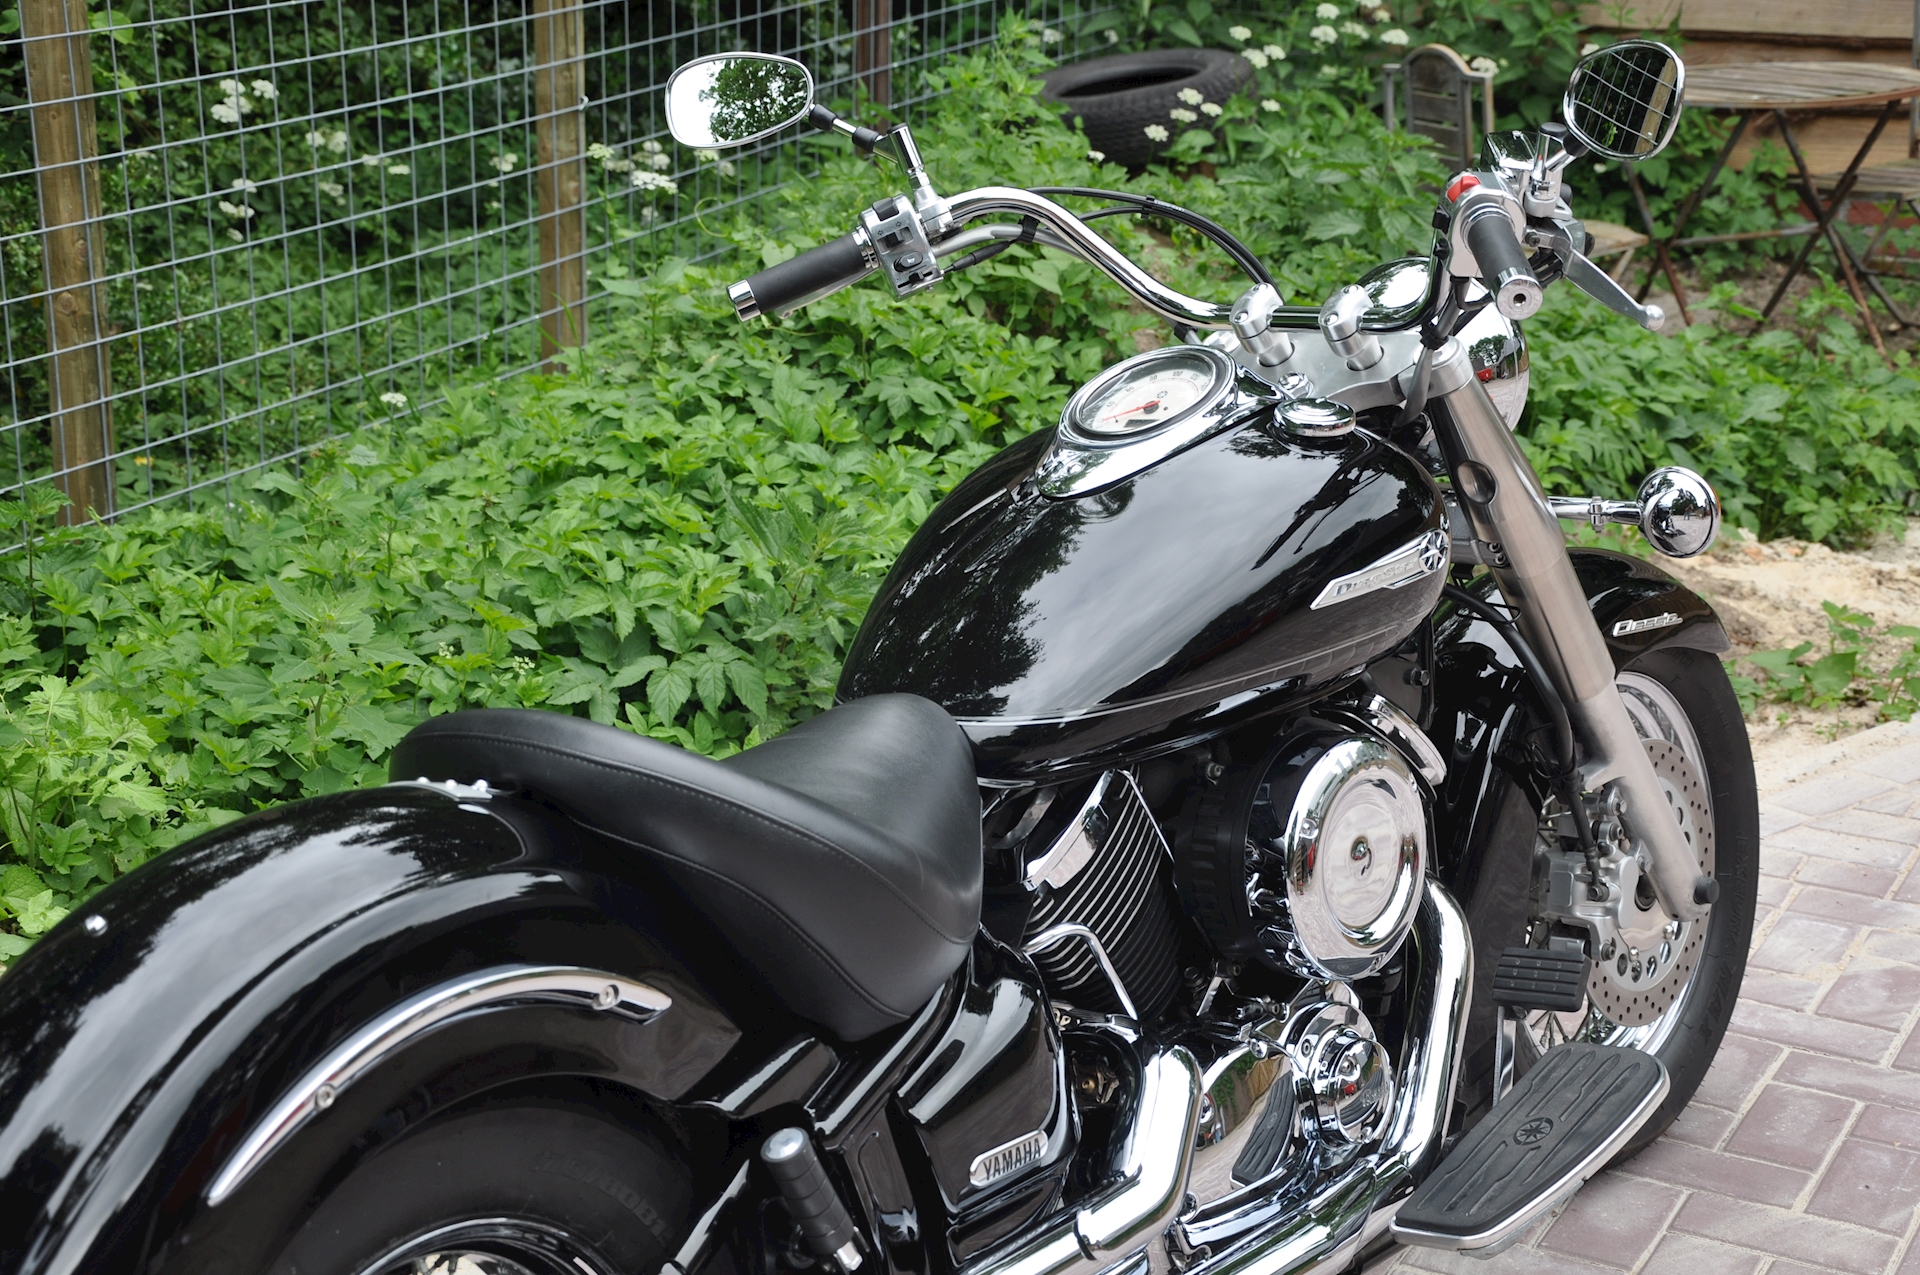 Мотоцикл ямаха xvs 400 drag star: отзывы, характеристики байка